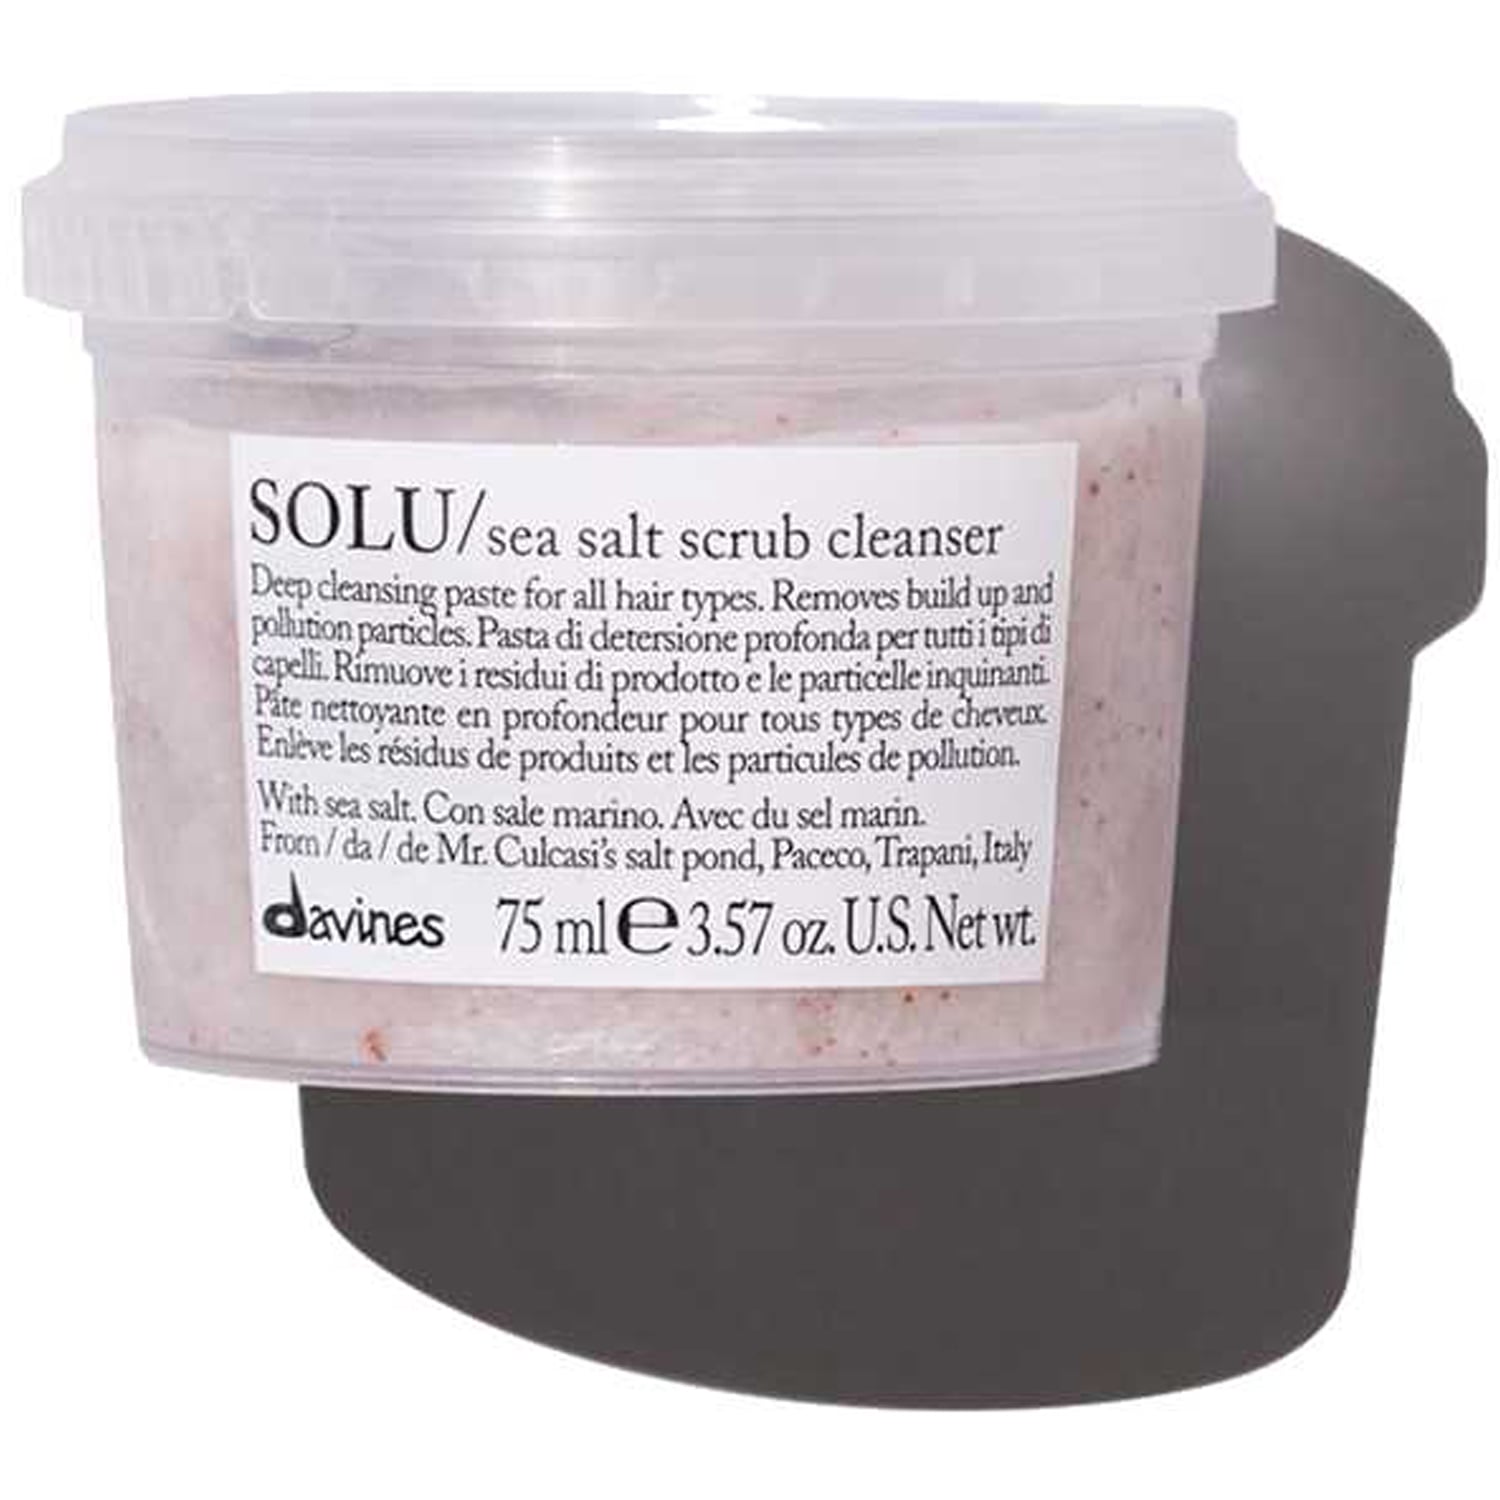 Davines Скраб с морской солью Sea Salt Scrub Cleanser, 75 мл (Davines, Essential Haircare) скраб для кожи головы с морской солью davines solu sea salt scrub cleanser 250 мл